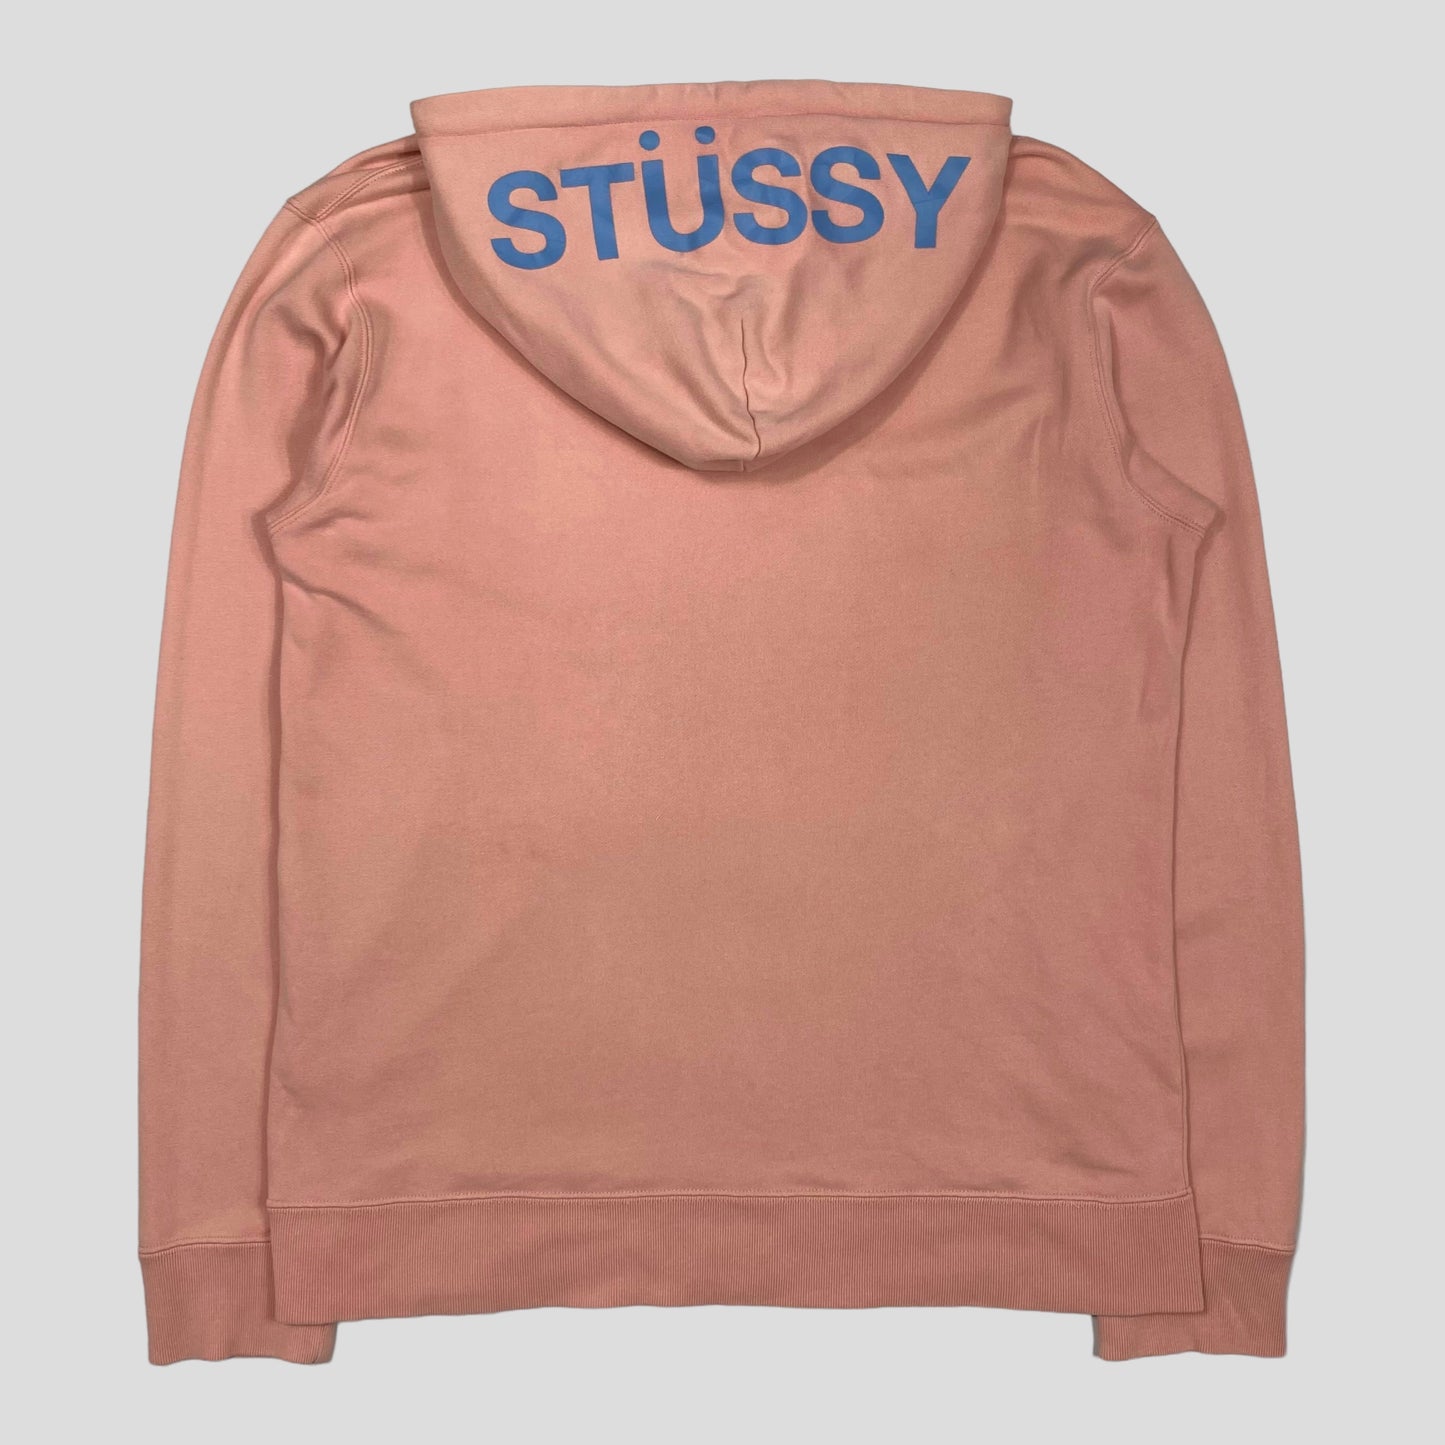 Stussy Hood Print Pullover - M/L